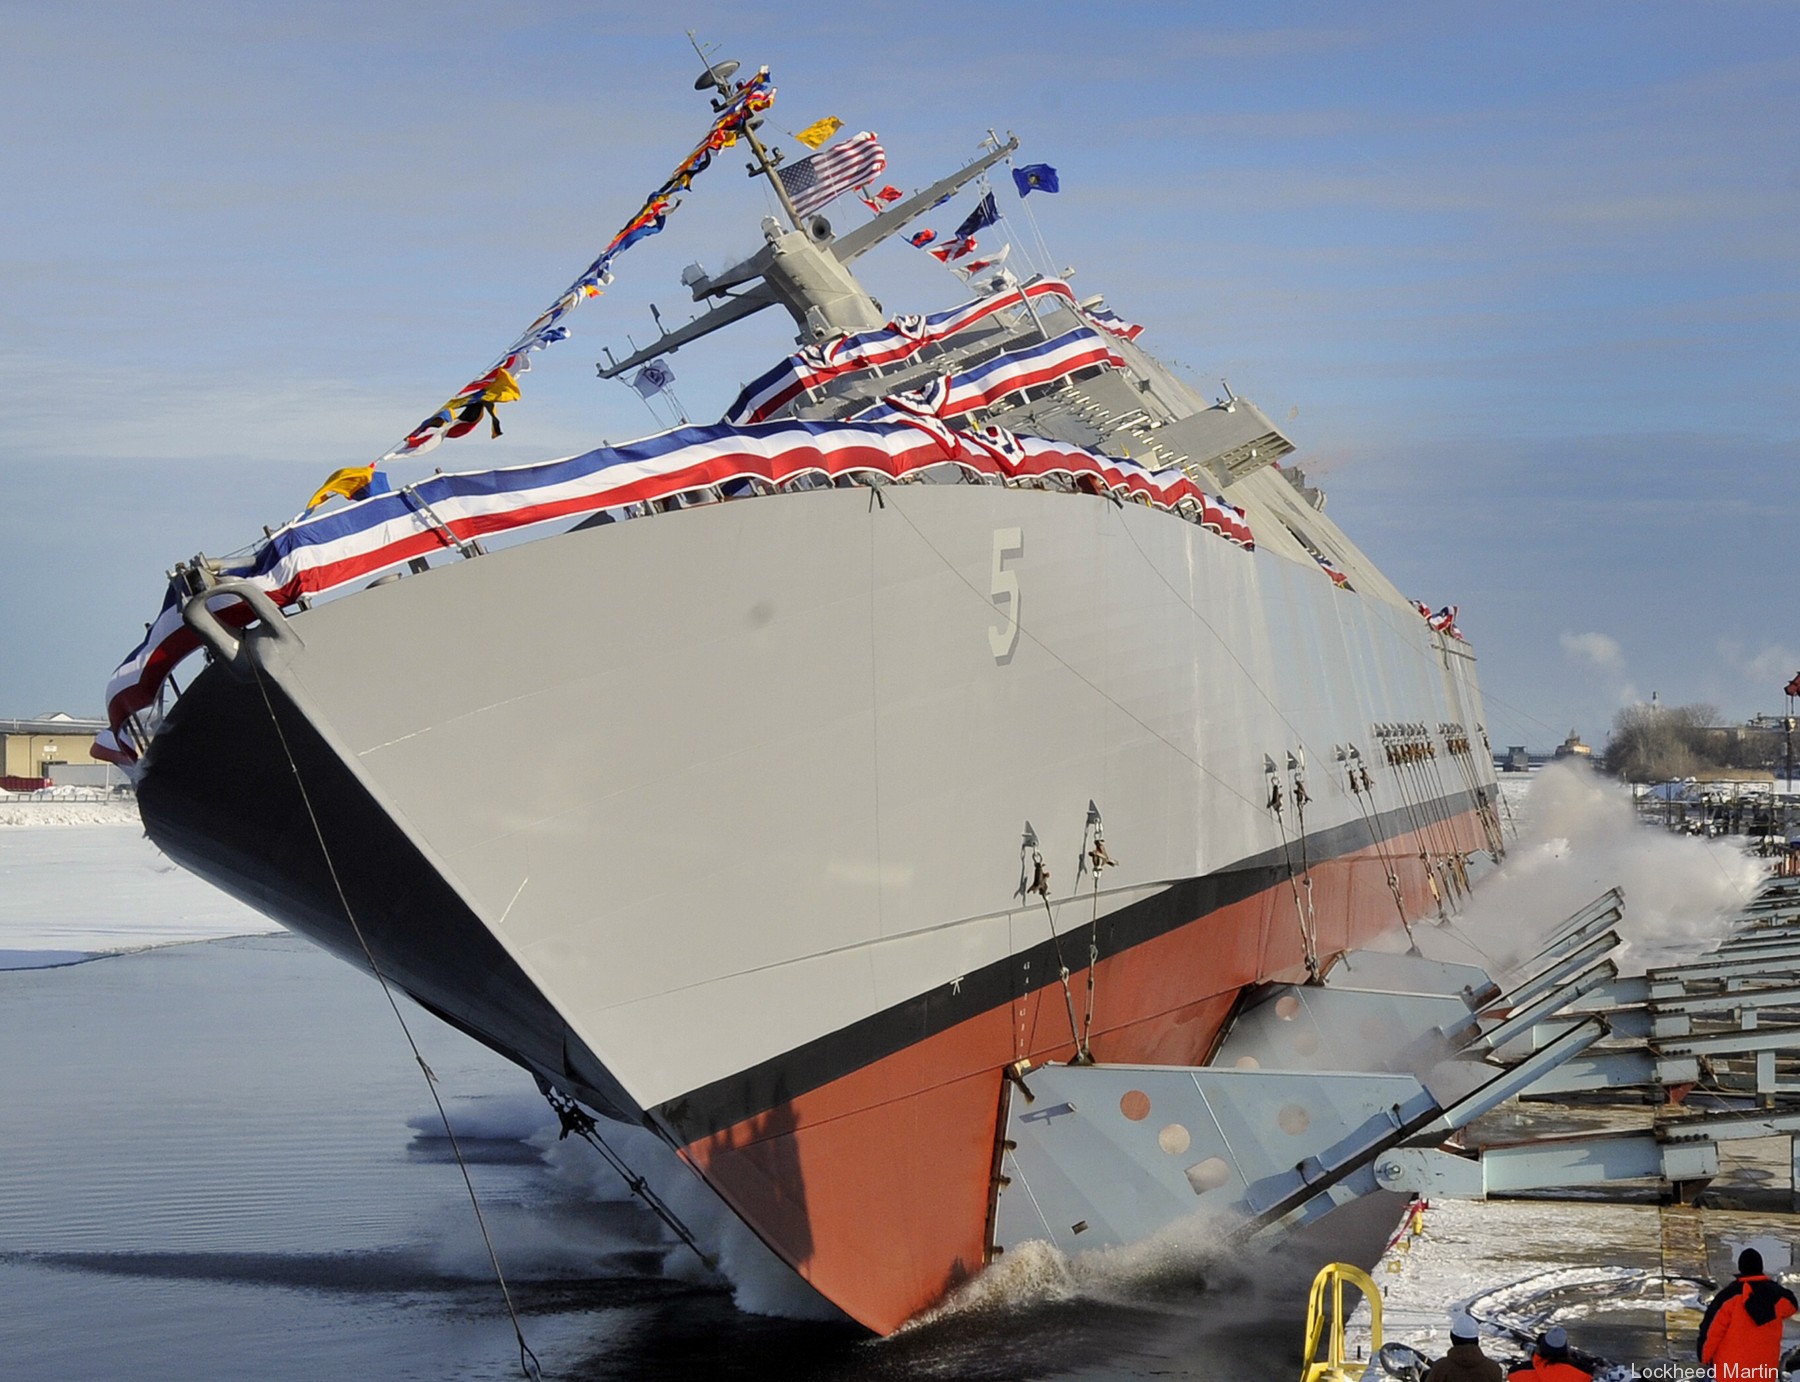 lcs-5 uss milwaukee freedom class littoral combat ship us navy 05 launching marinette marine wisconsin